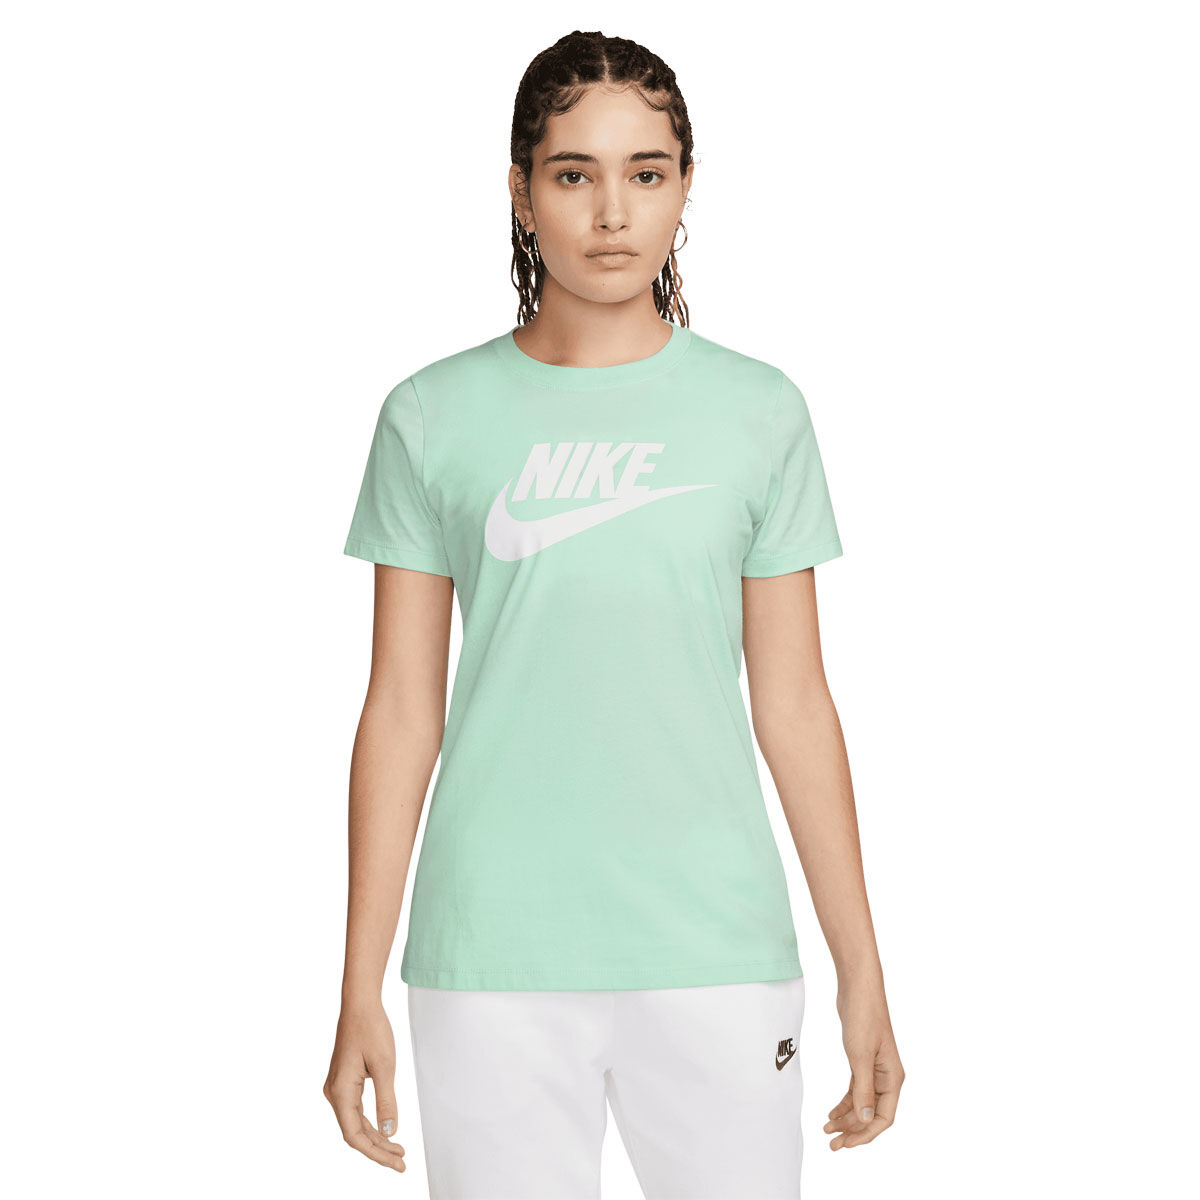 Nike Sportswear Essential Futura White Crop T-Shirt